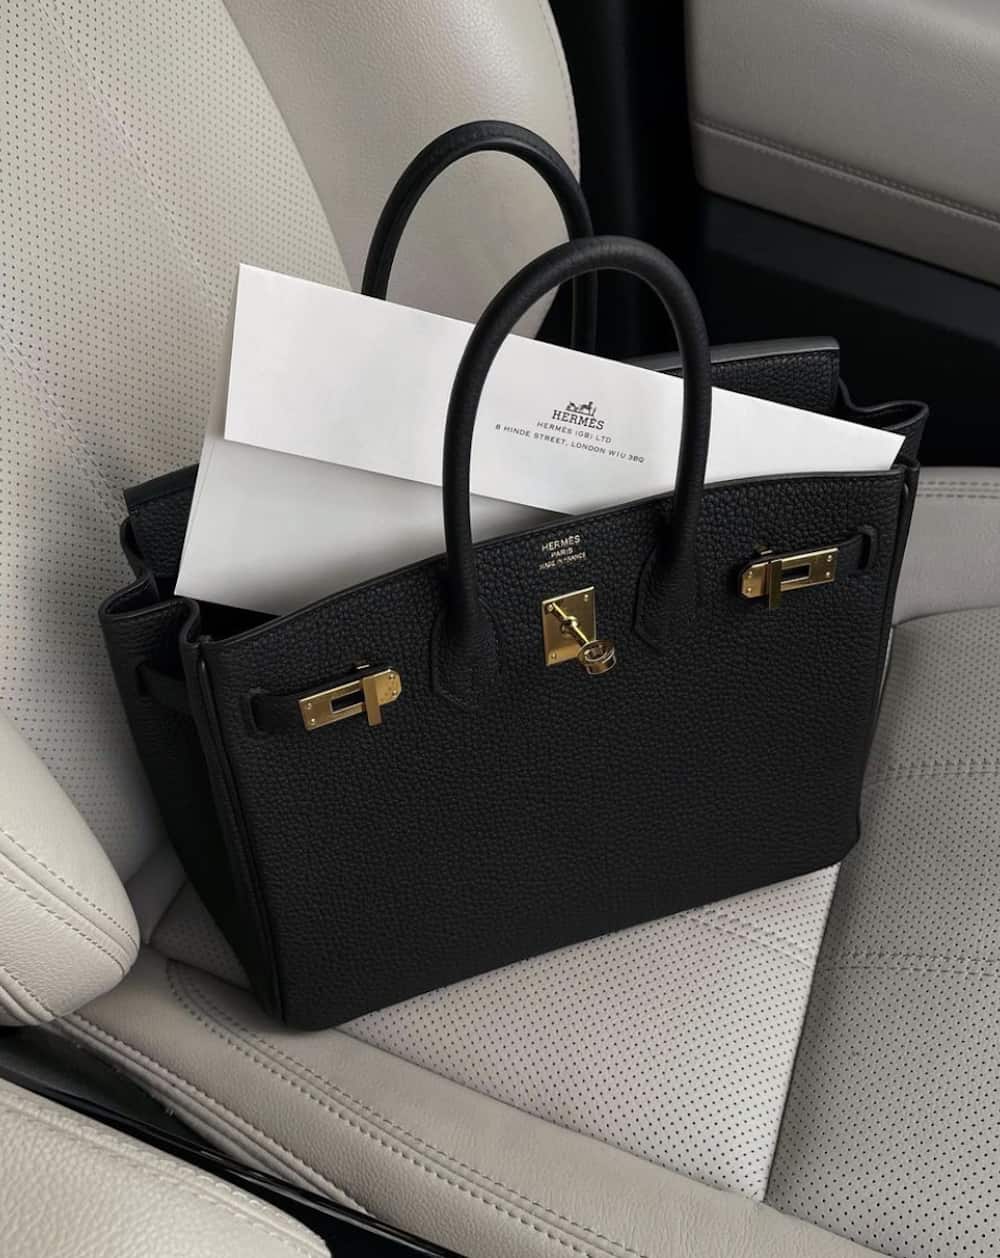 image of a black Hermes Birkin 25 bag sitting on a car seat